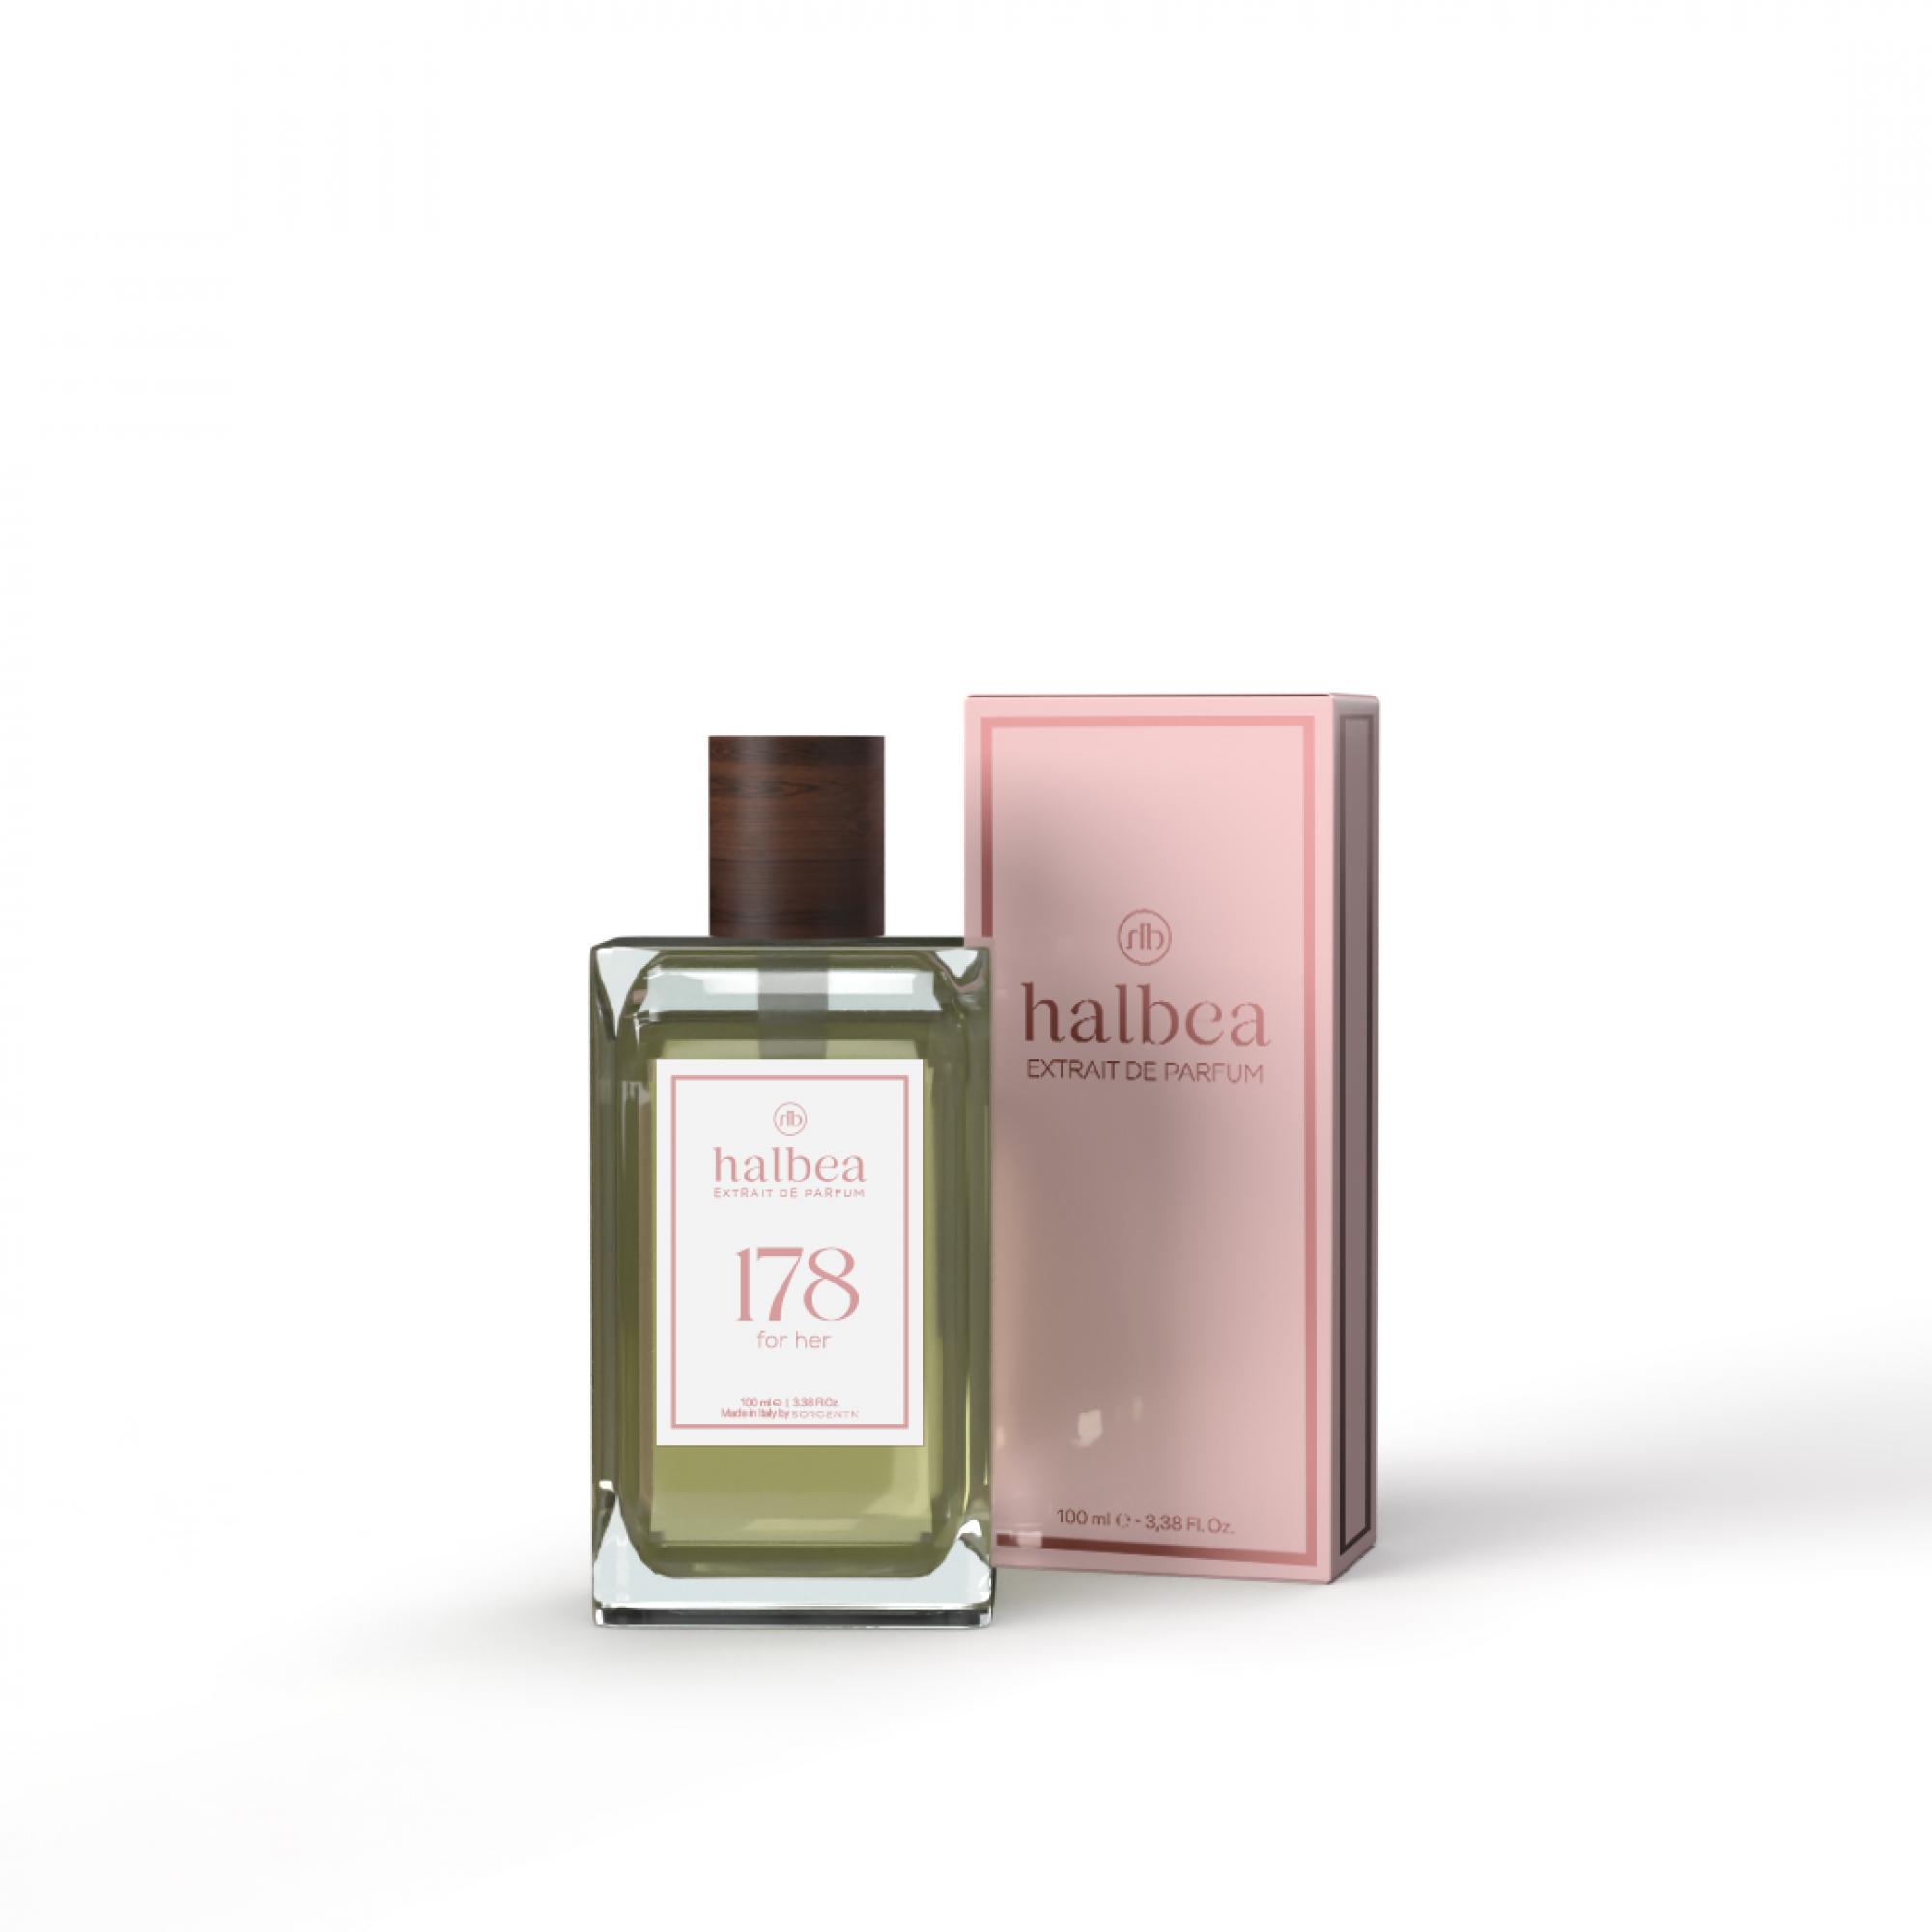 Halbea Parfum Nr. 178 insp. by Armani Terre di Gioia Sorgenta 100ml